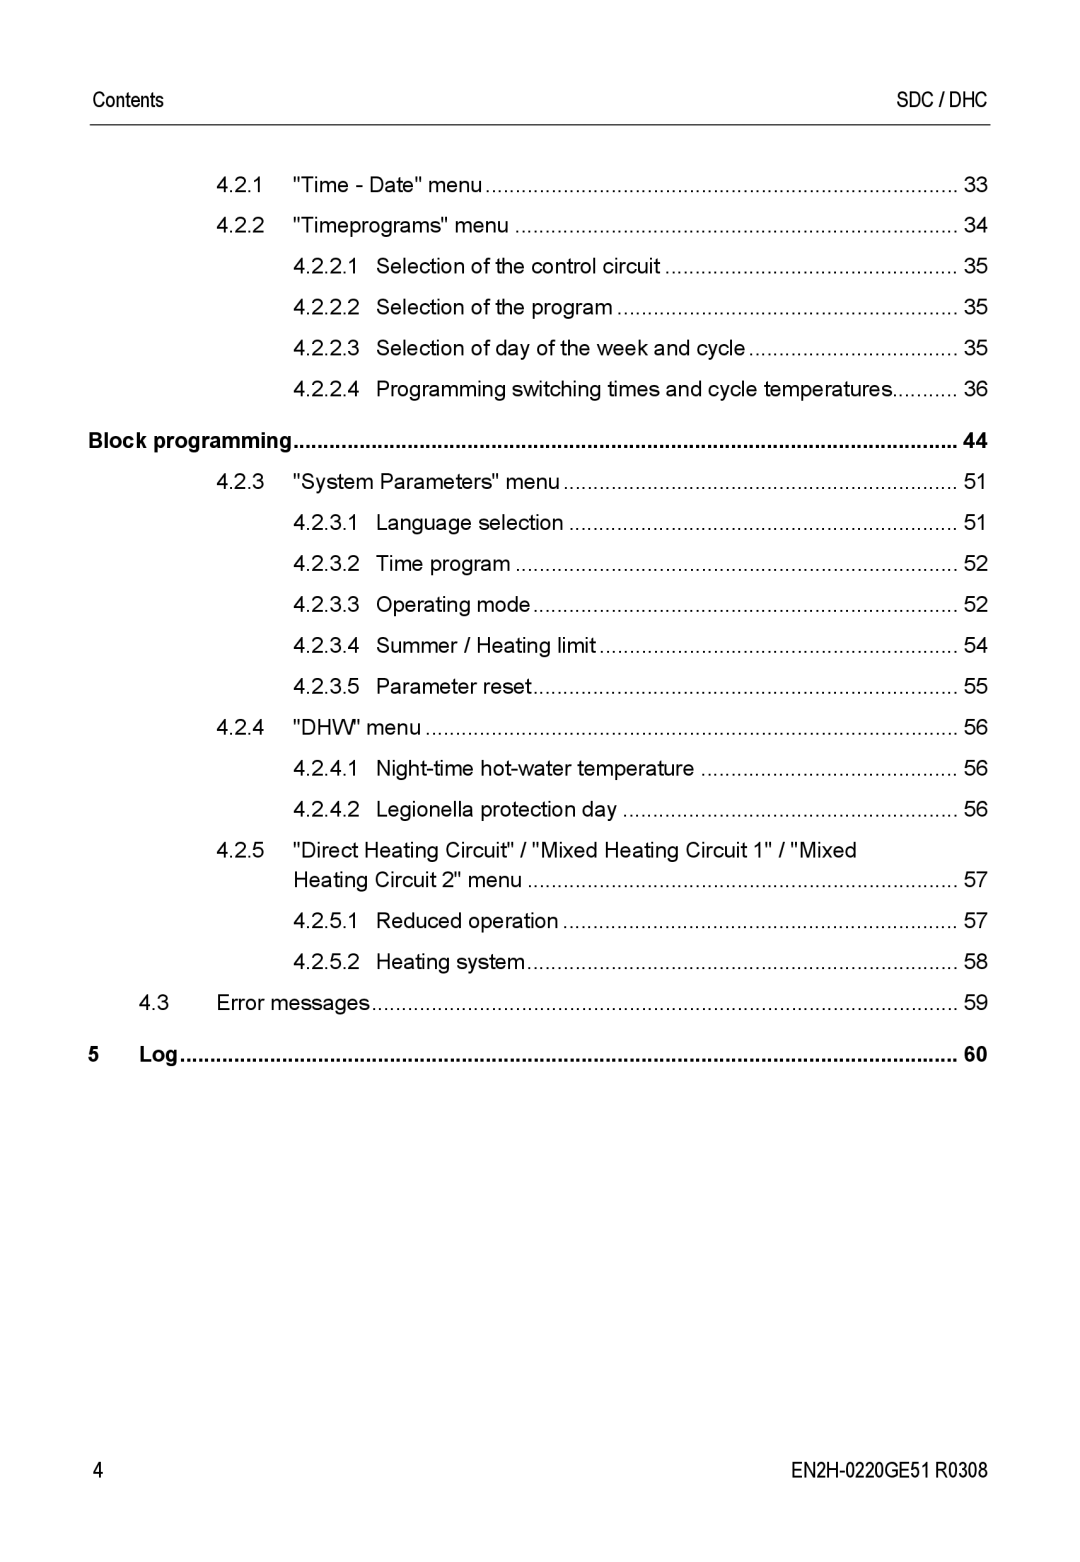 Honeywell SDC manual Contents, Log 